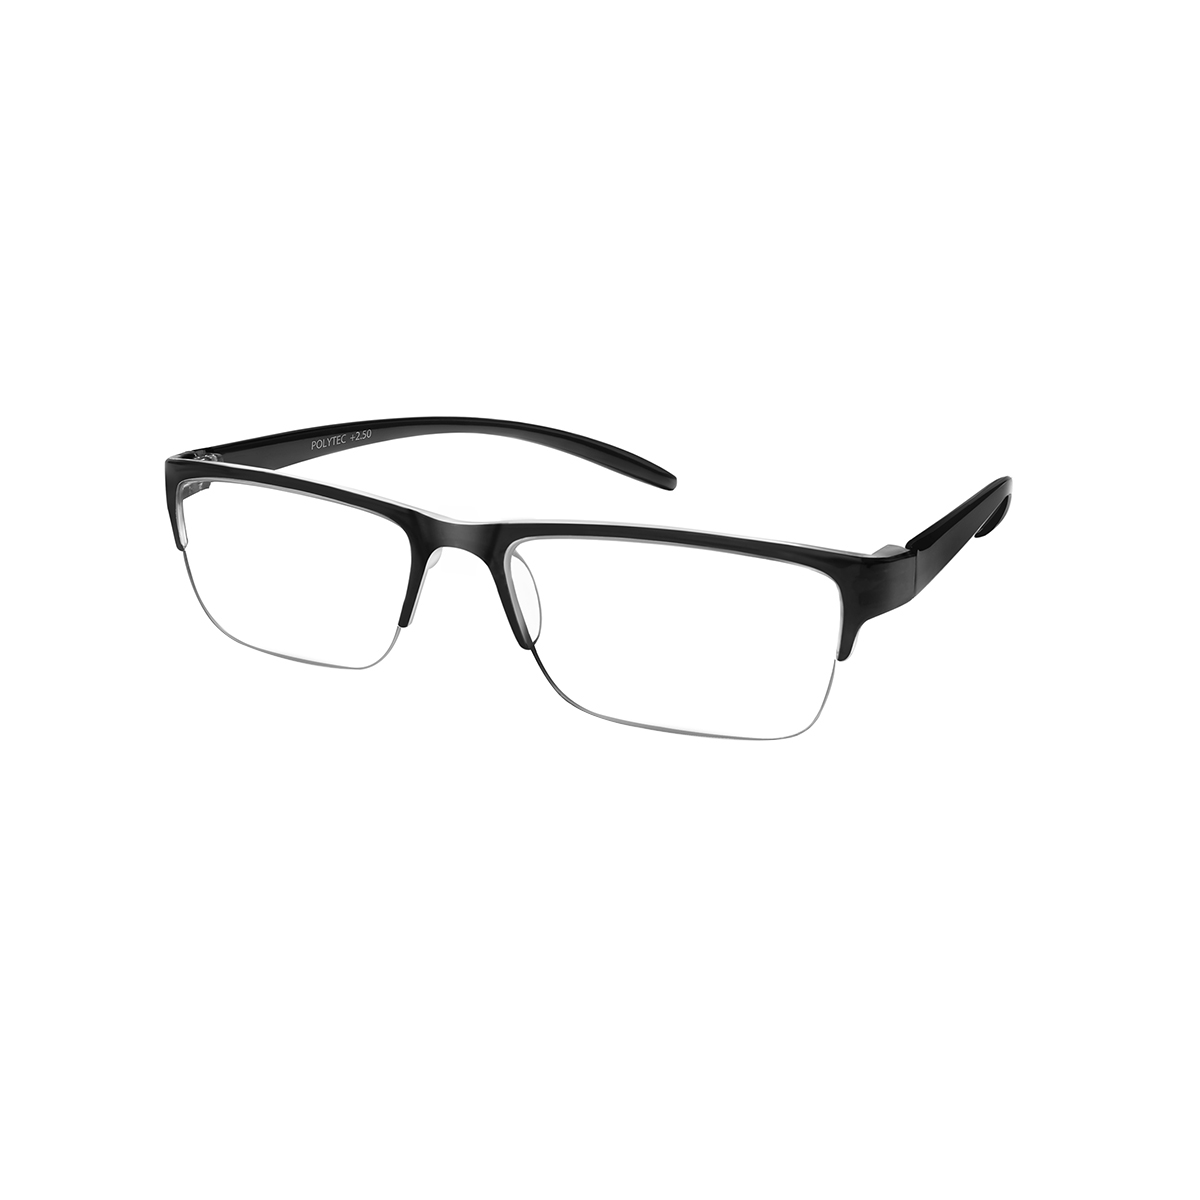 Florrie - Browline Black-Transparent Reading Glasses for Men & Women